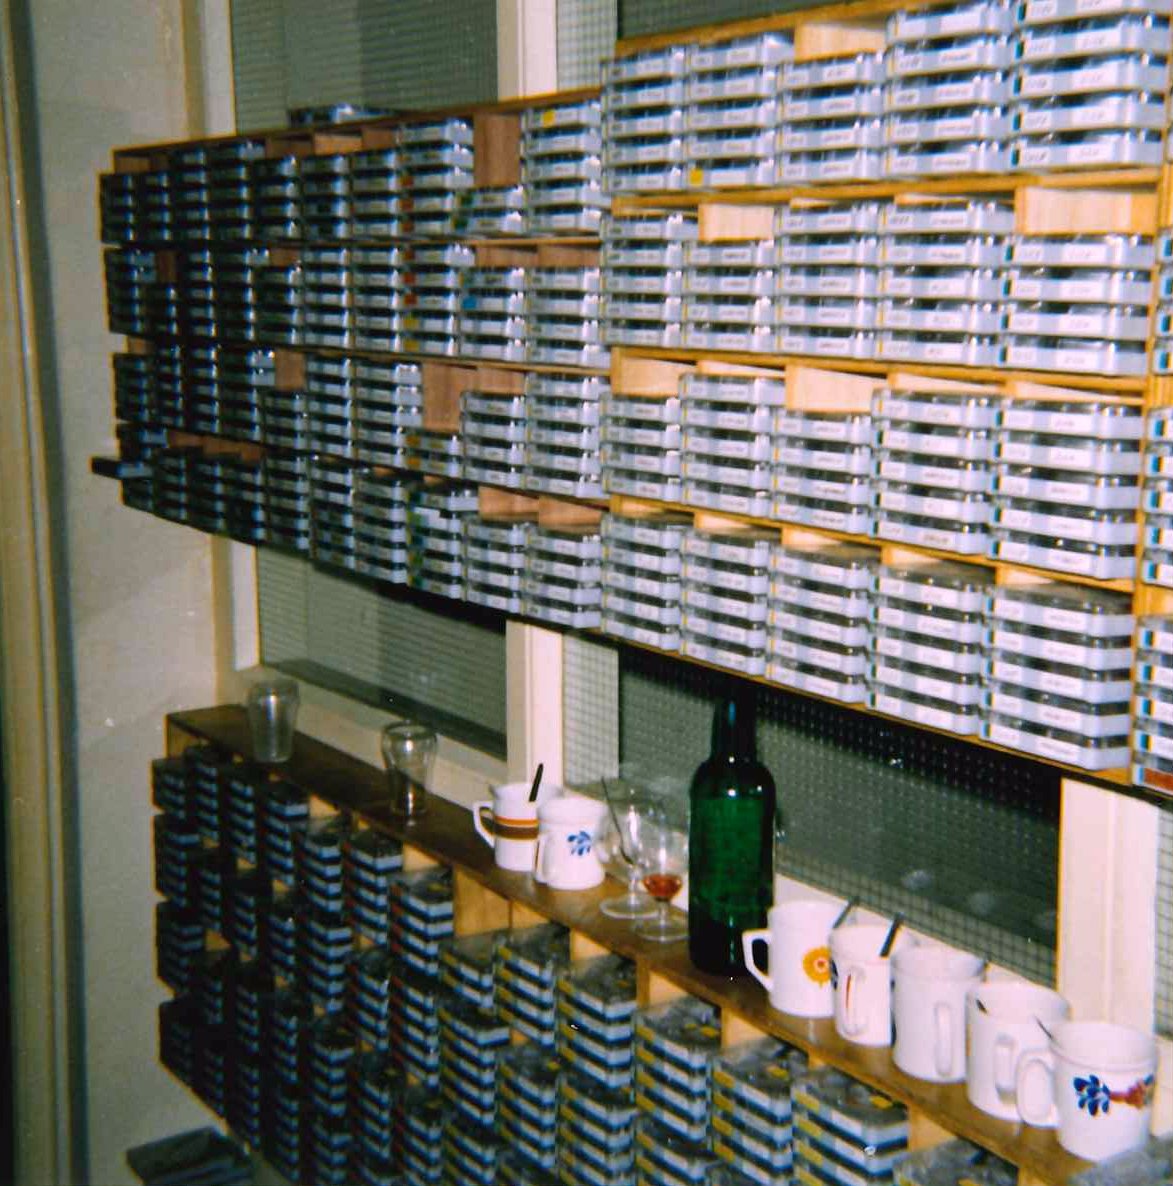 tape cartridges